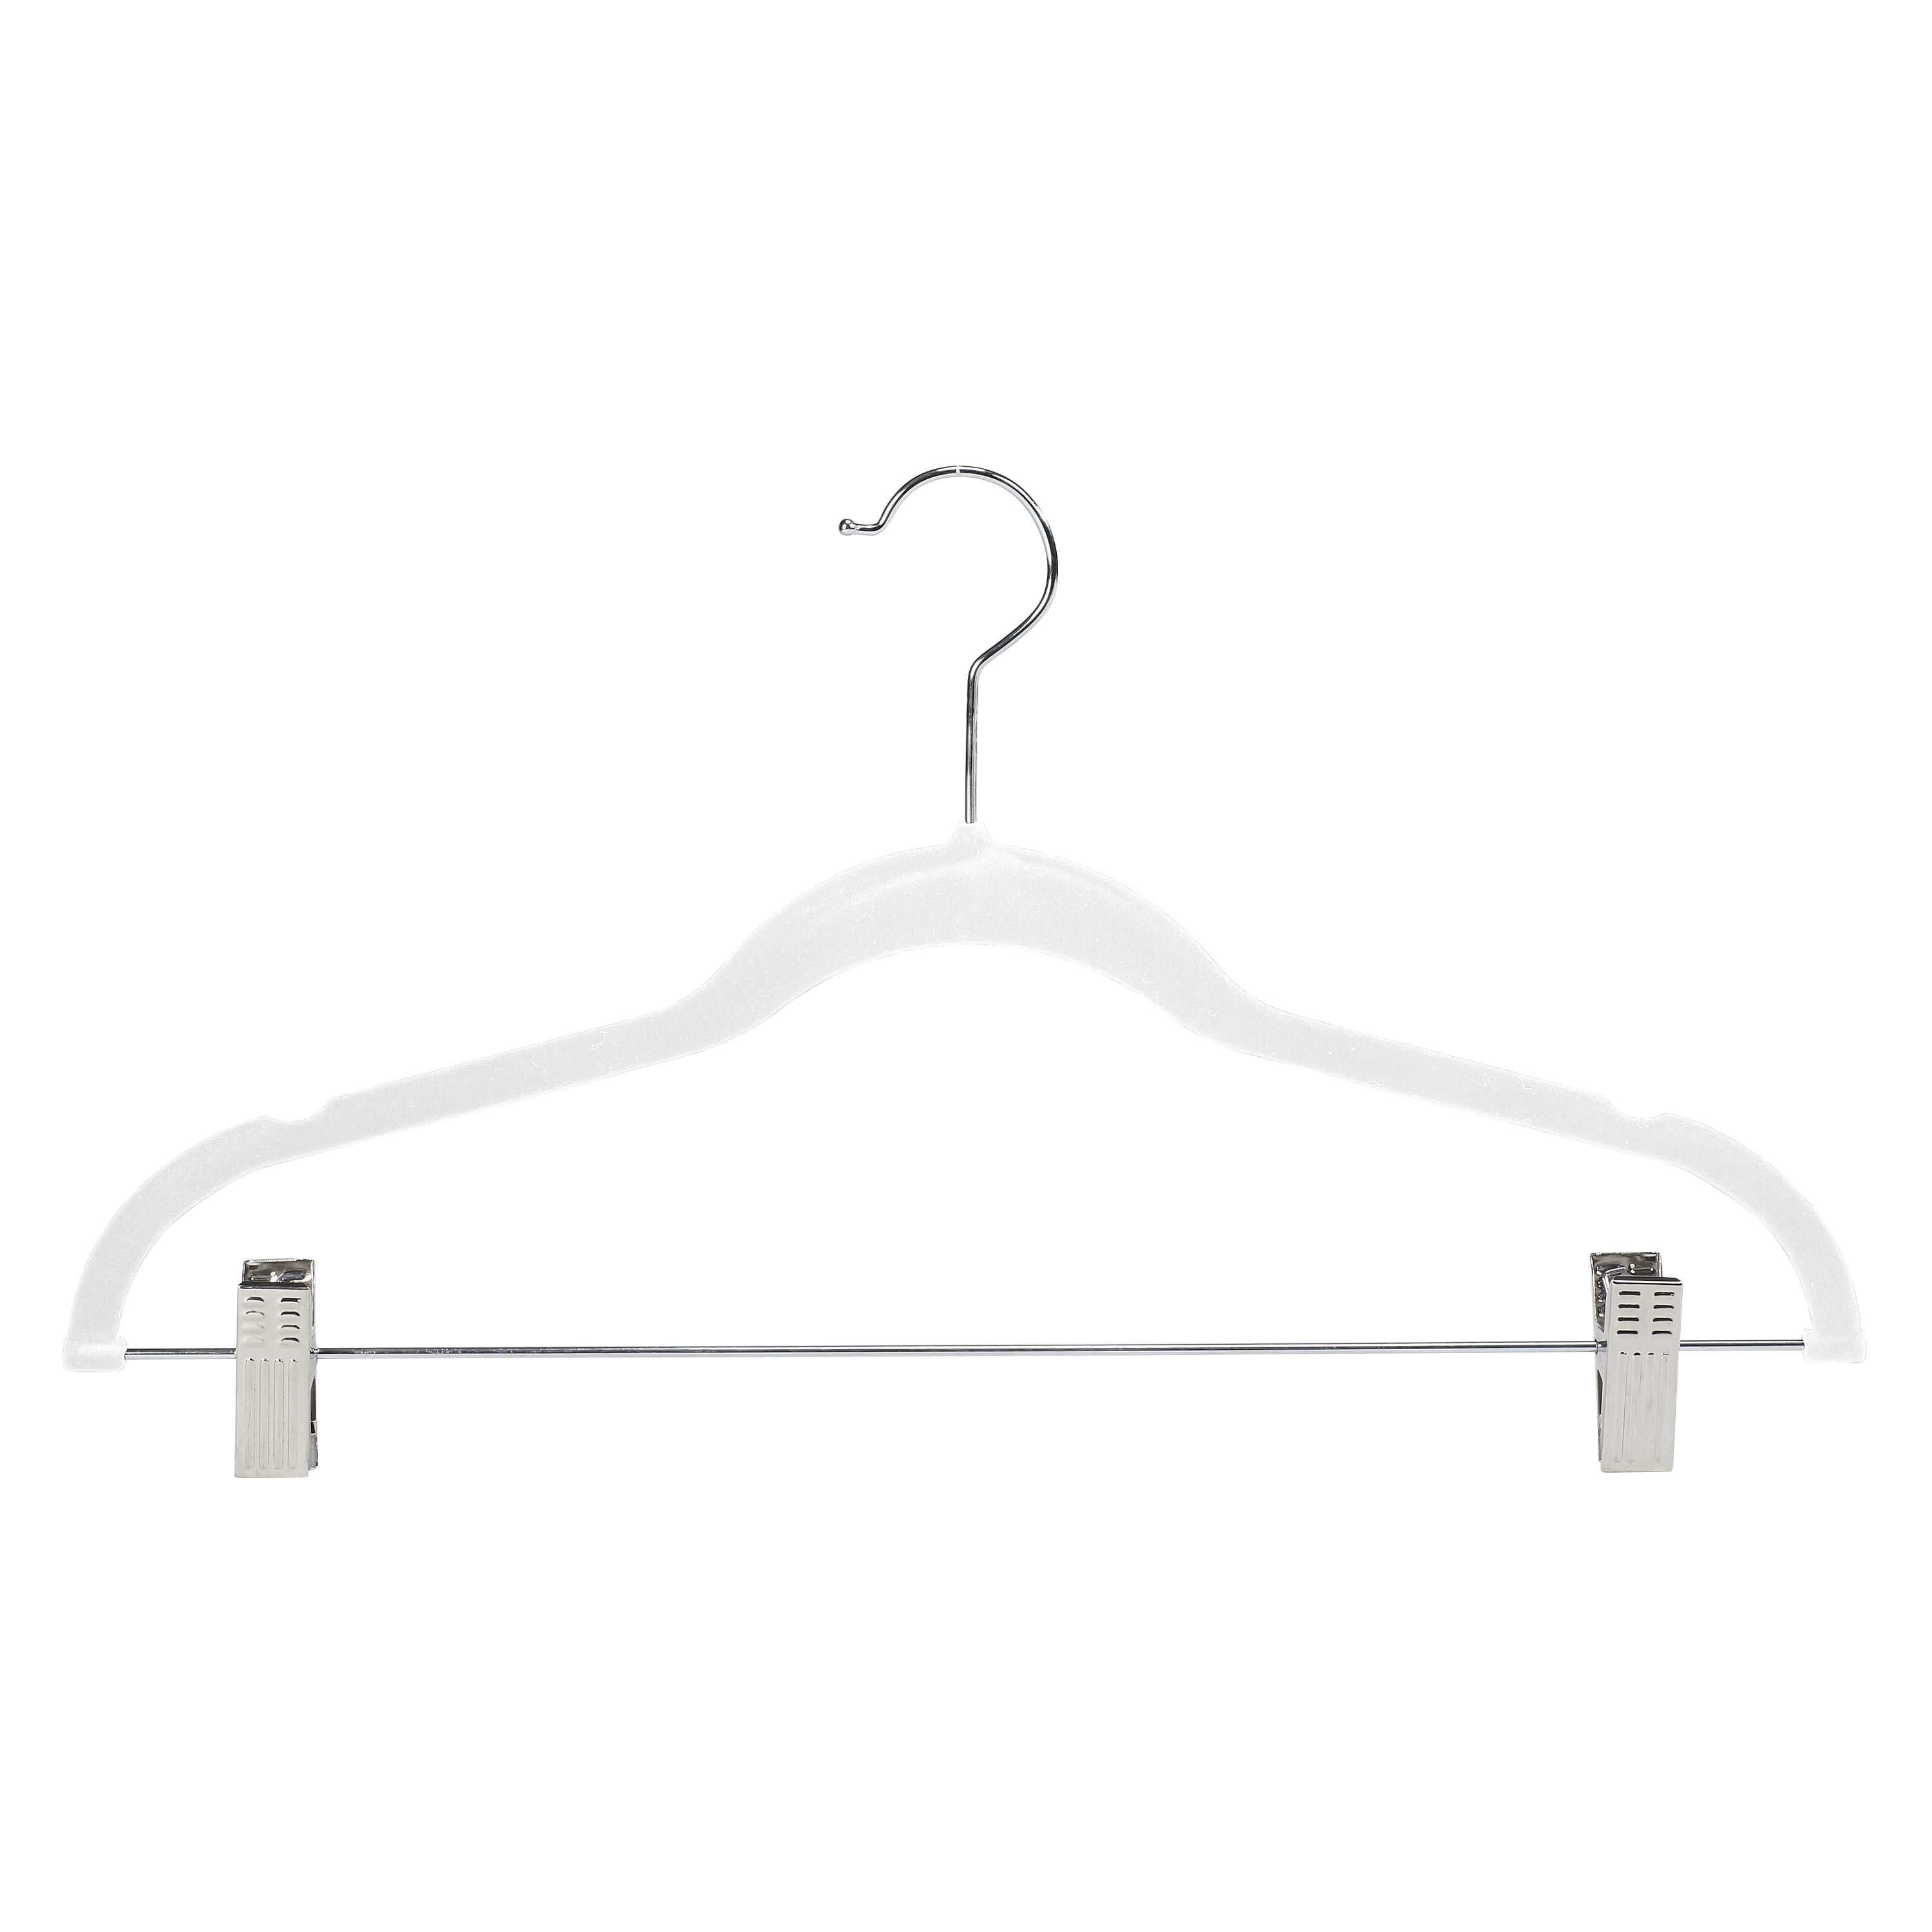 Abdo 60 Pack Velvet Skirt Hangers with Clips In Fuchsia, Clothes